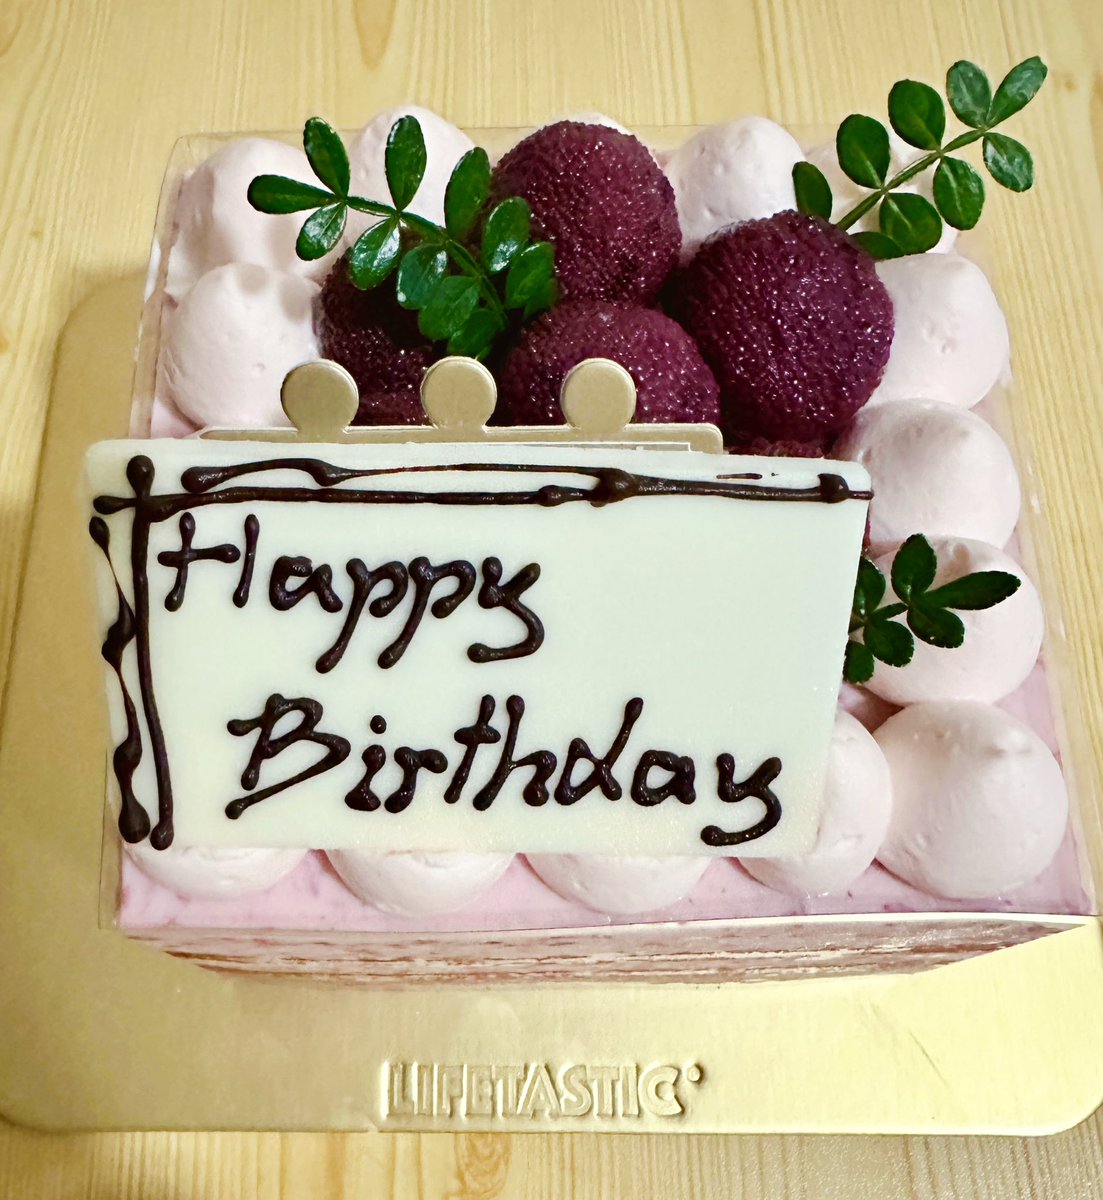 My birthday cake ❤️ #LIFETASTIC #LIFETASTICHK #food #eat #cake #desserts #楊梅伯爵茶蛋糕 #tea #yummy #April #aries #YangmeiandEarlGreyTeaLayerCake